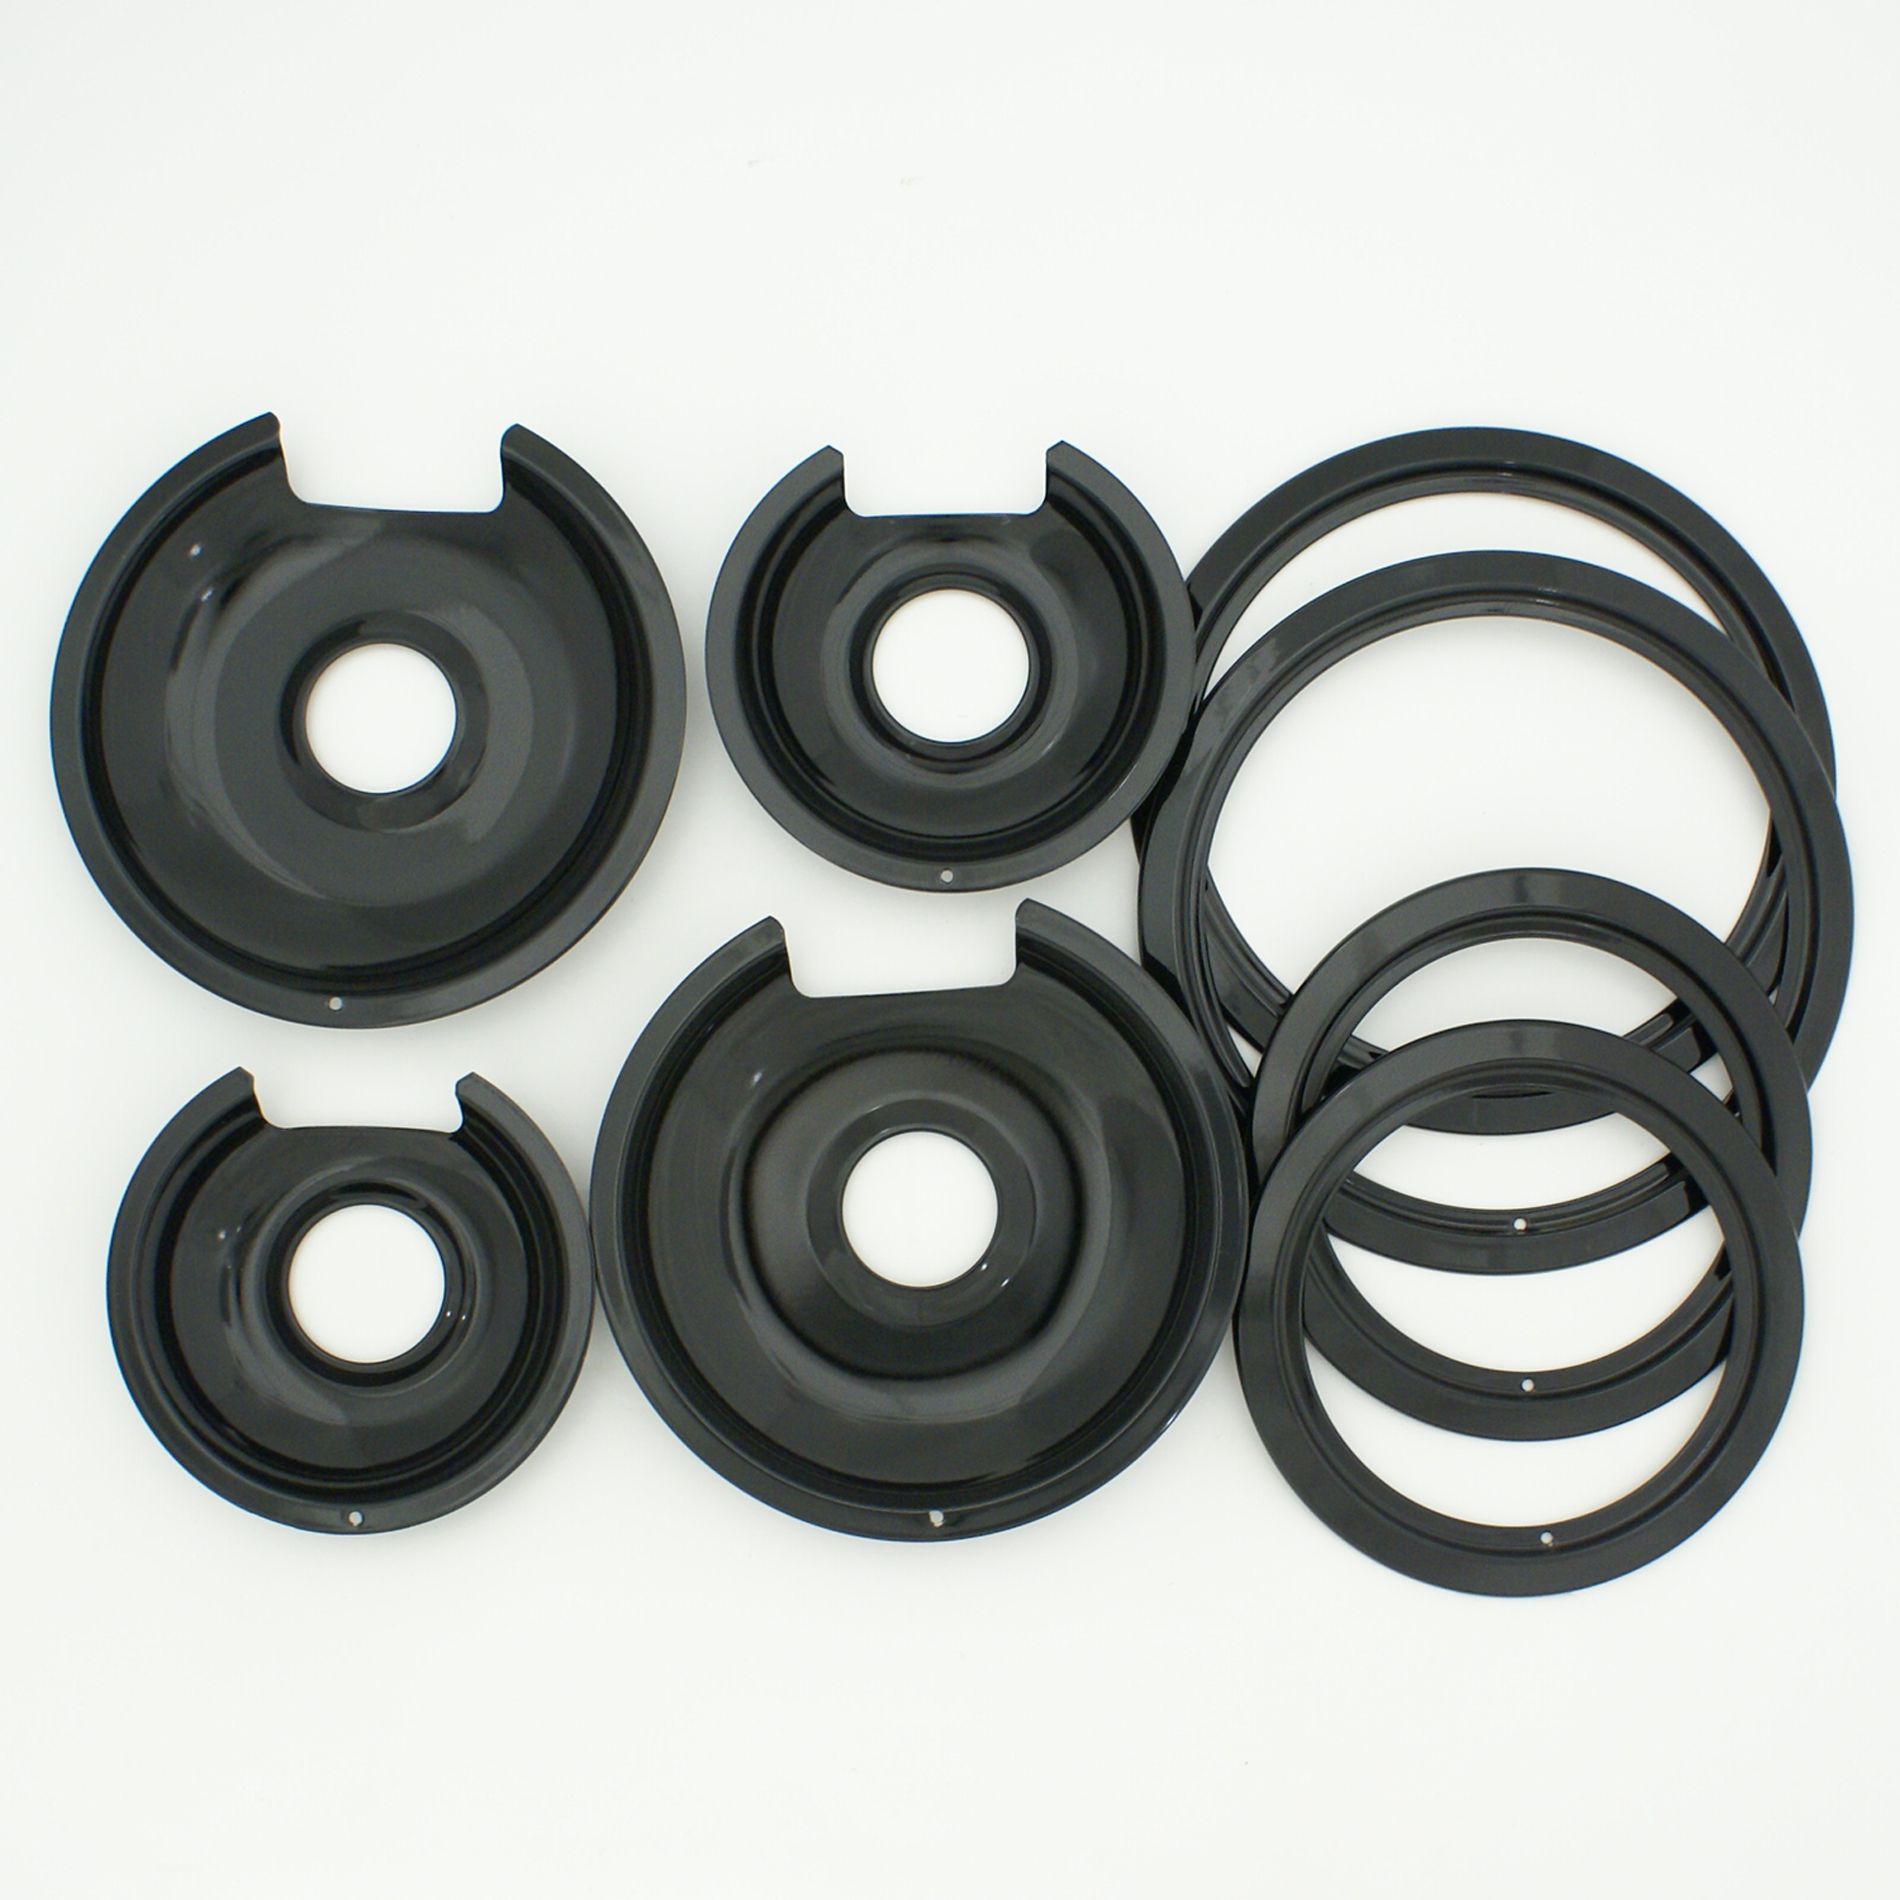 Range Kleen 2 - 6" and 2 - 8" black porcelain drip pans -  4 pack